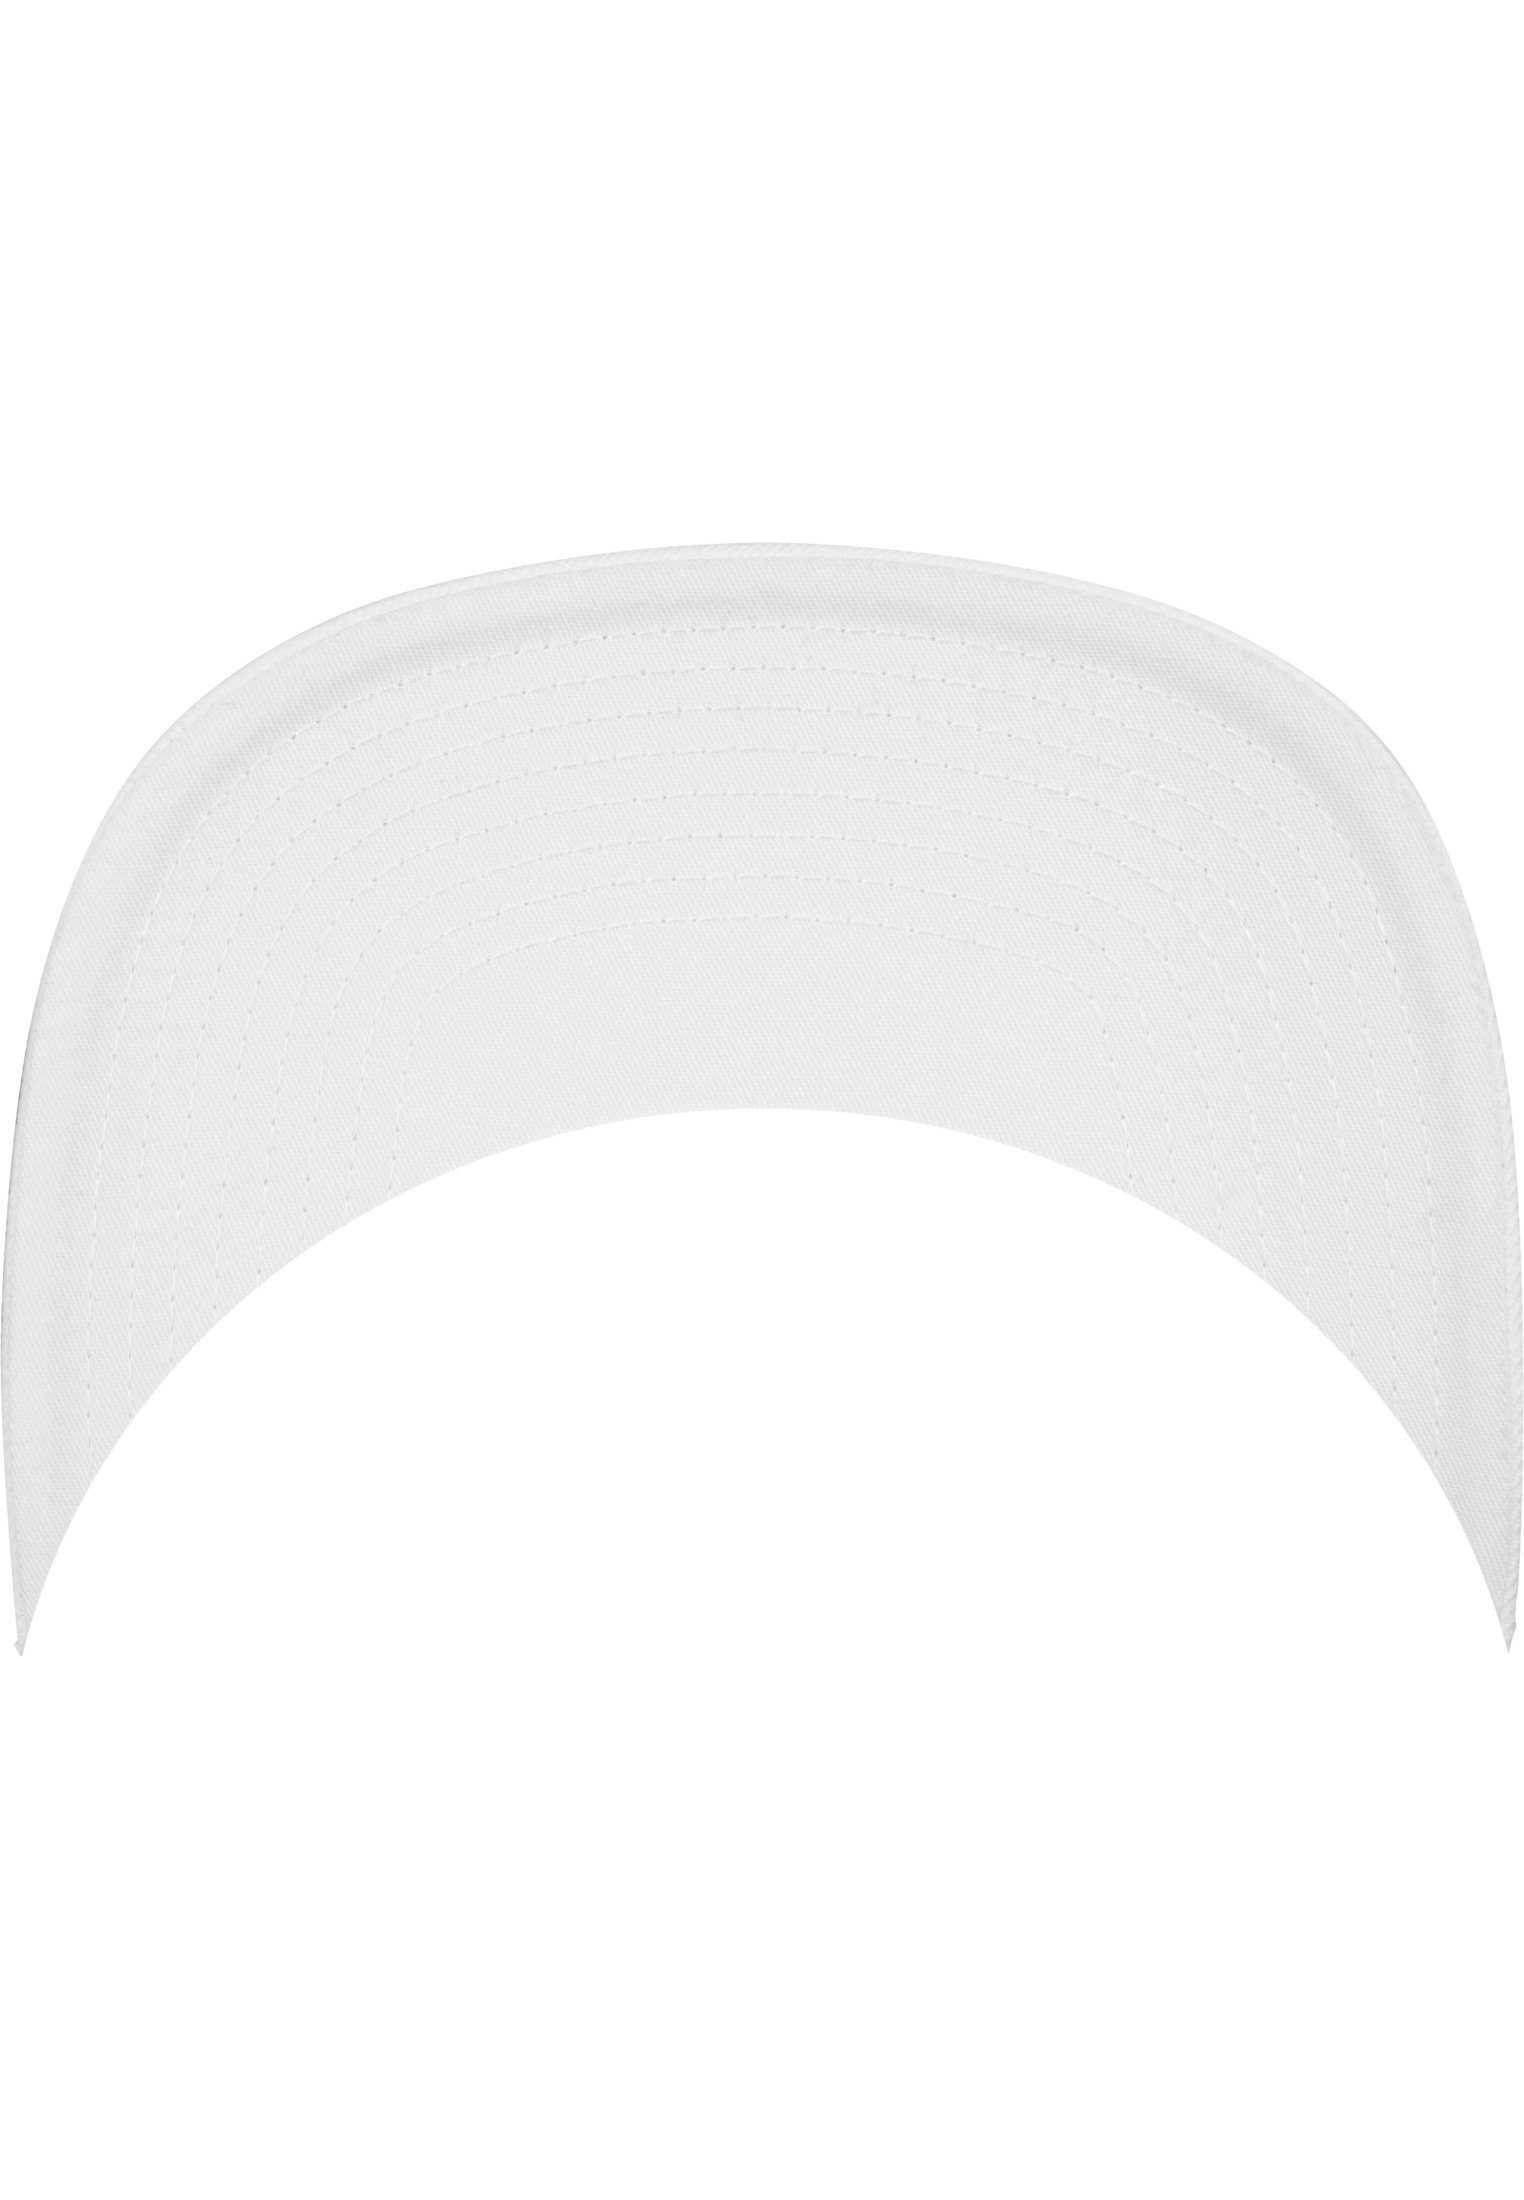 Snapback Flex Bandana Snapback Cap Tie Flexfit white/white